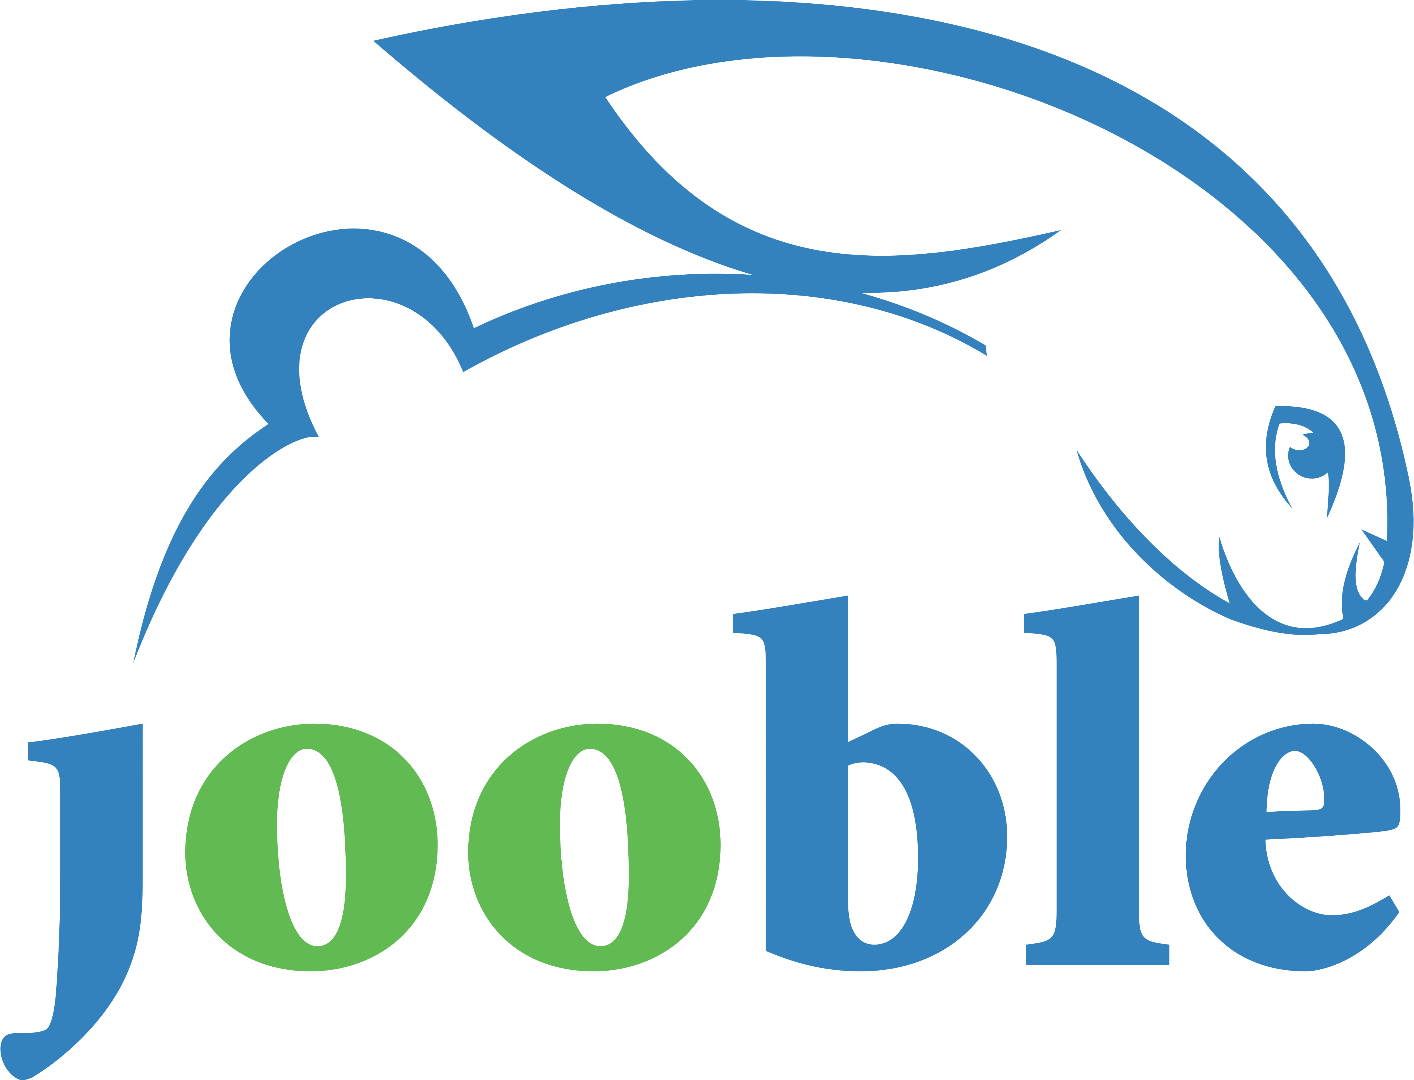 Jooble_logo.png